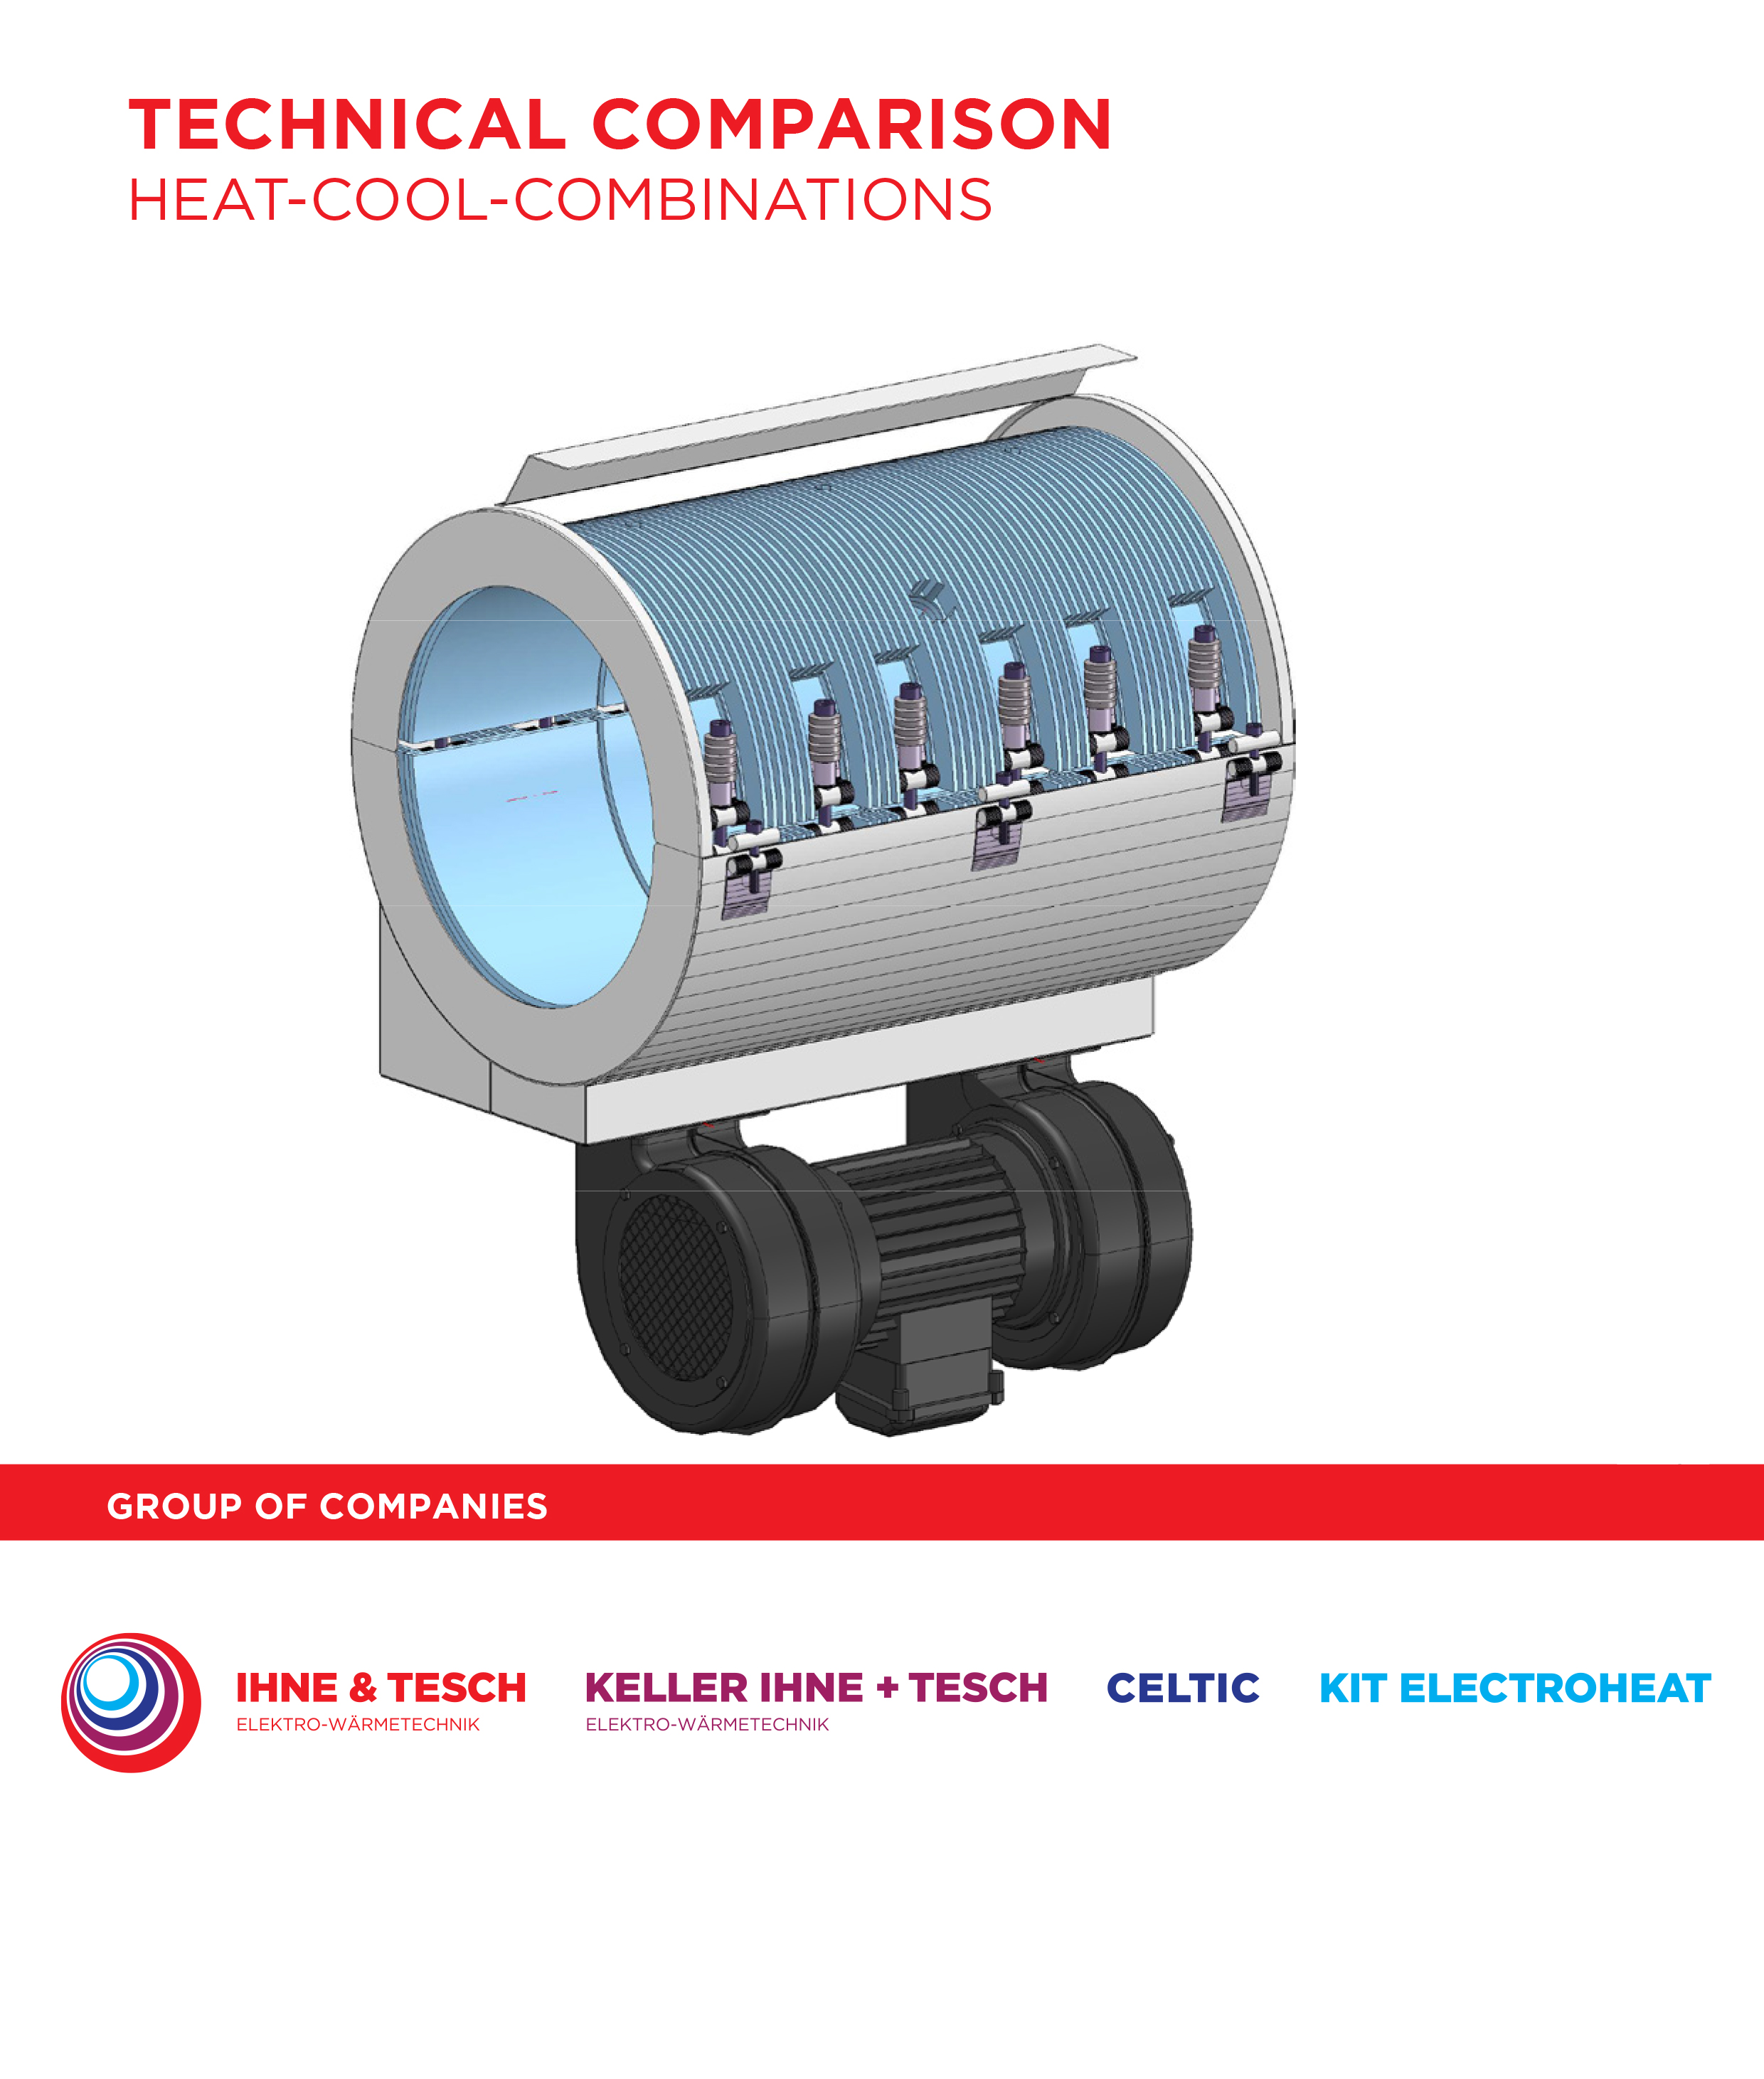 Heat-Cool-Combinations-technical-comparison